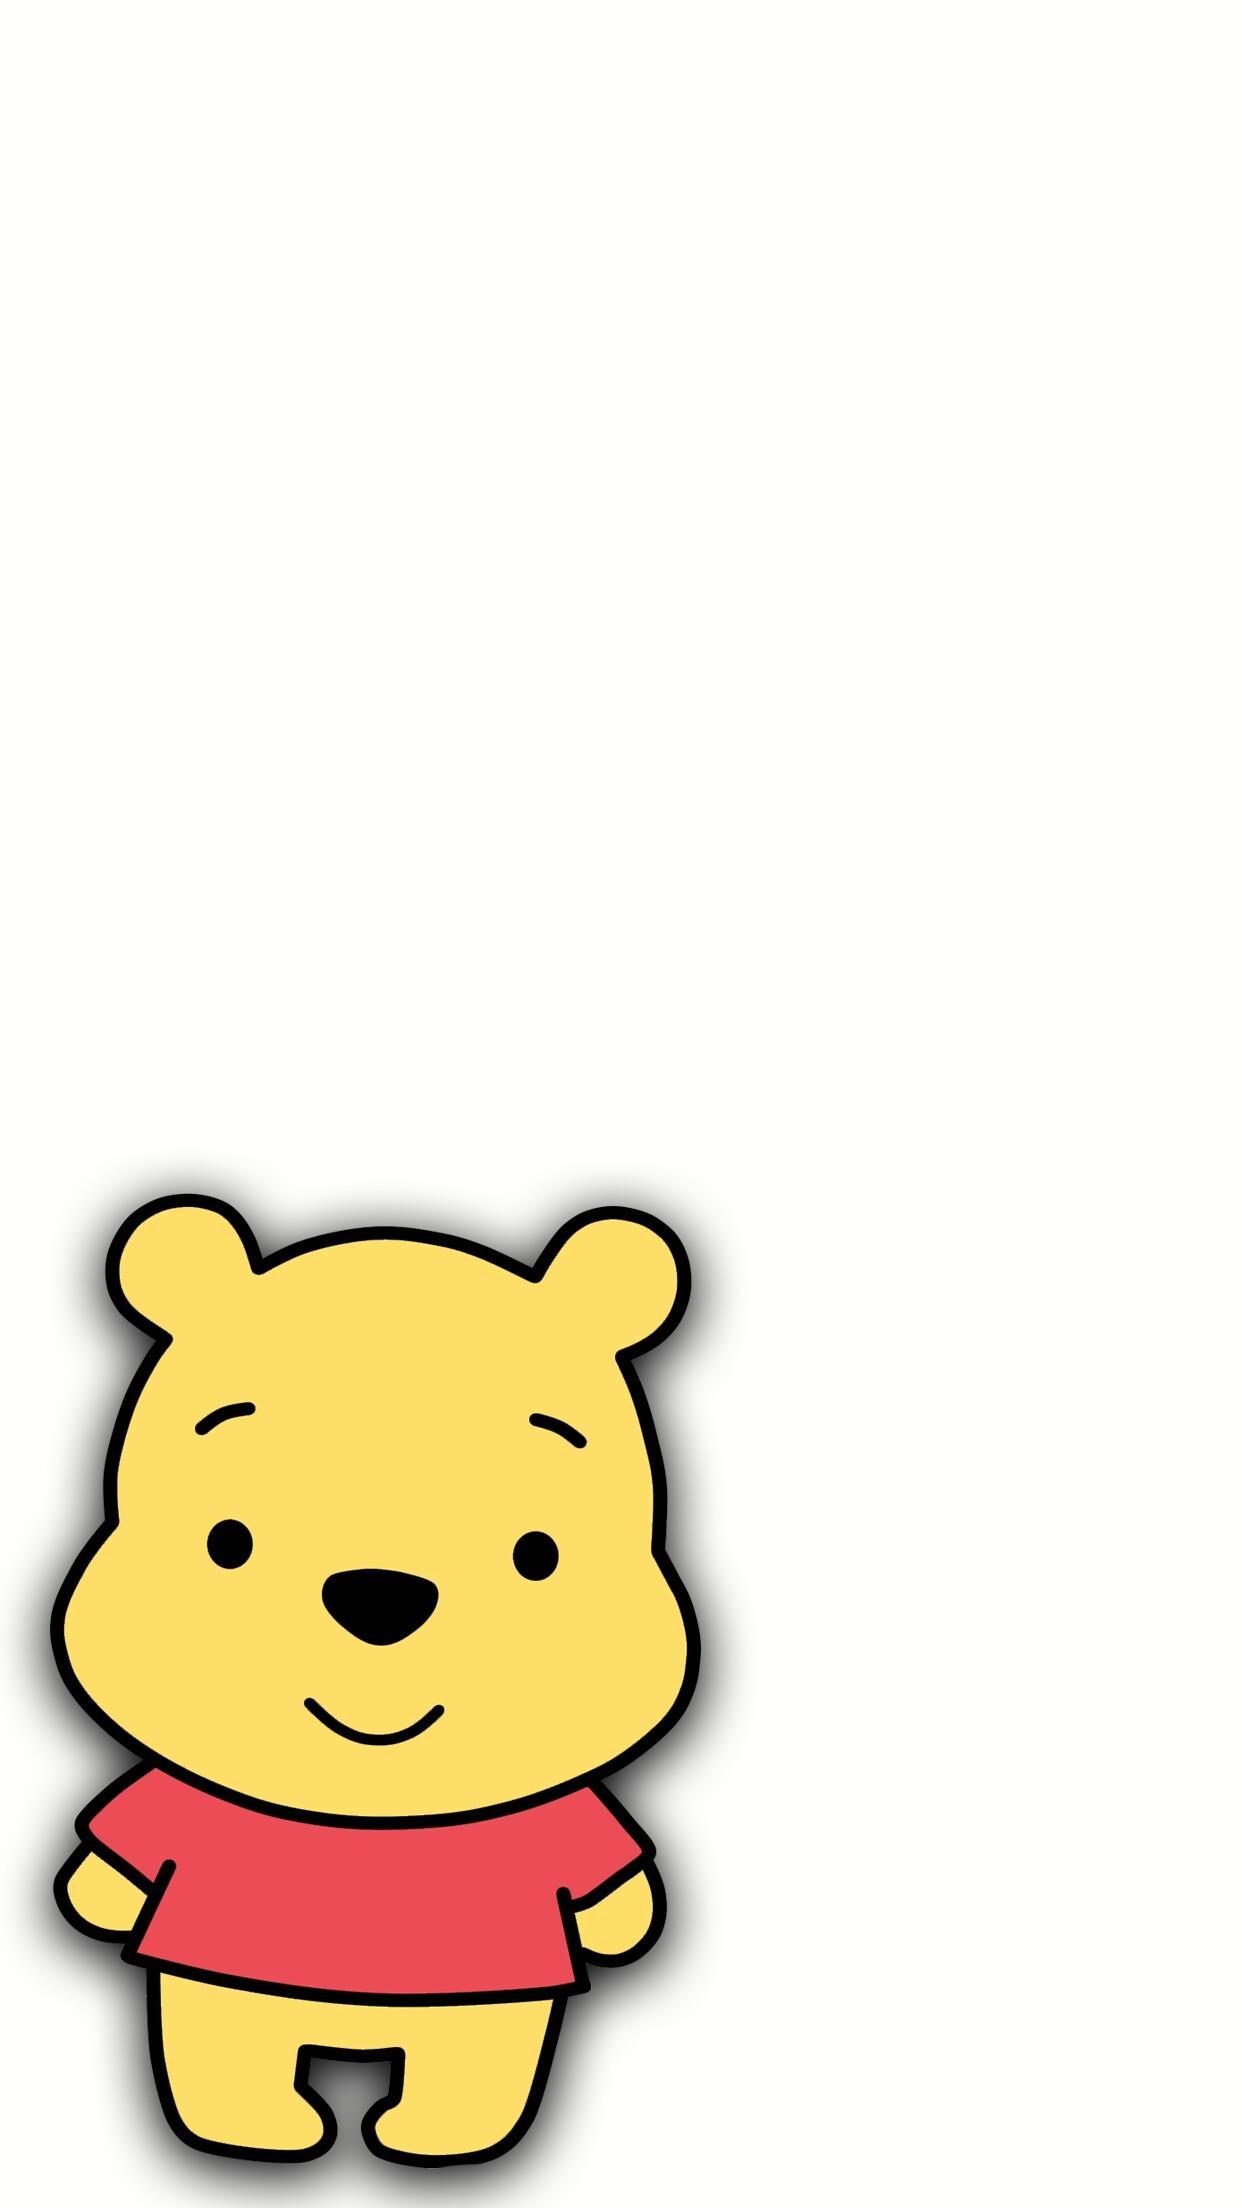 Winnie the Pooh Background